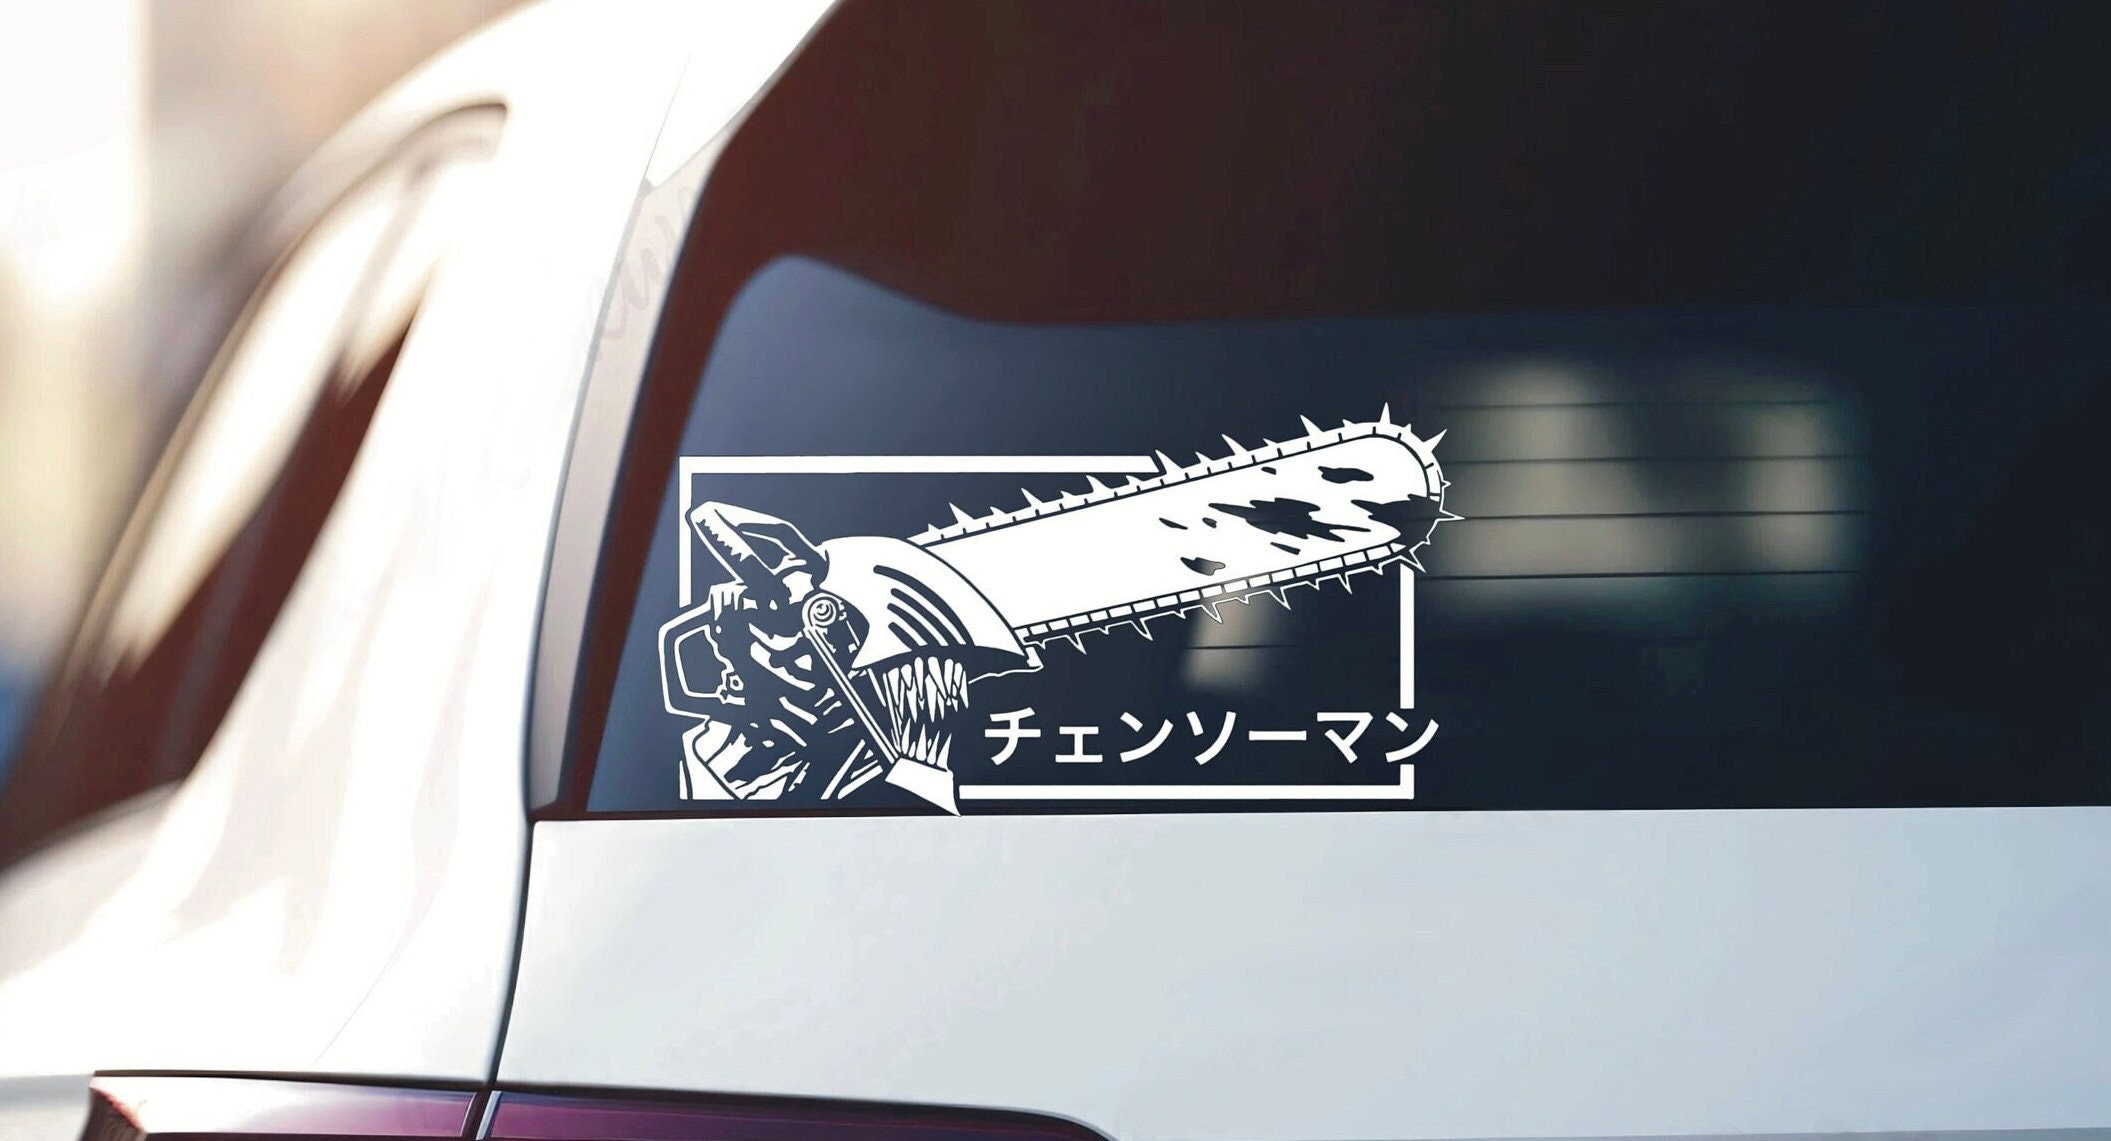  ikigomu-Power Cat Chainsaw-Man Anime Decal Sticker for  Car/Truck/Laptop/Bumper/Window : Sports & Outdoors